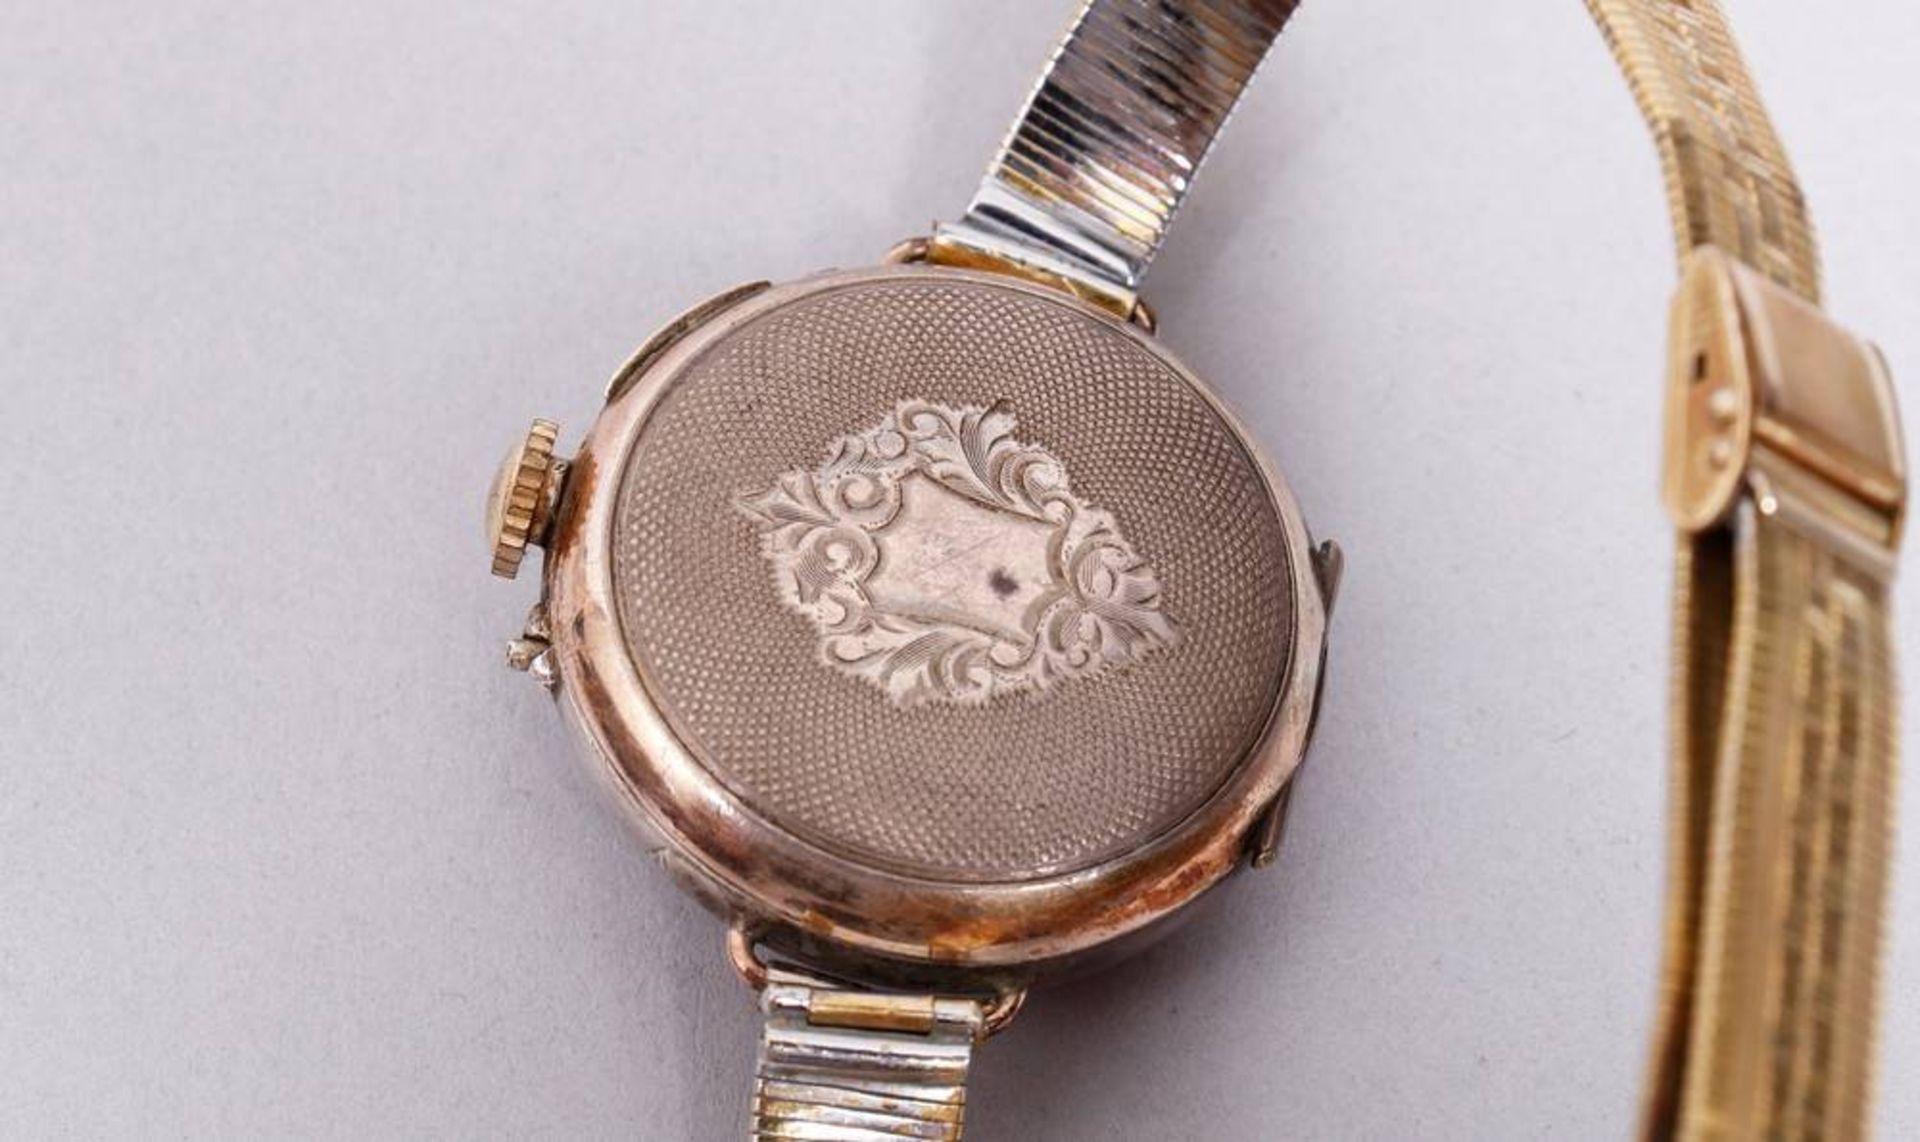 Wrist watch, 800 silver, 1st half 20th C. - Image 3 of 4